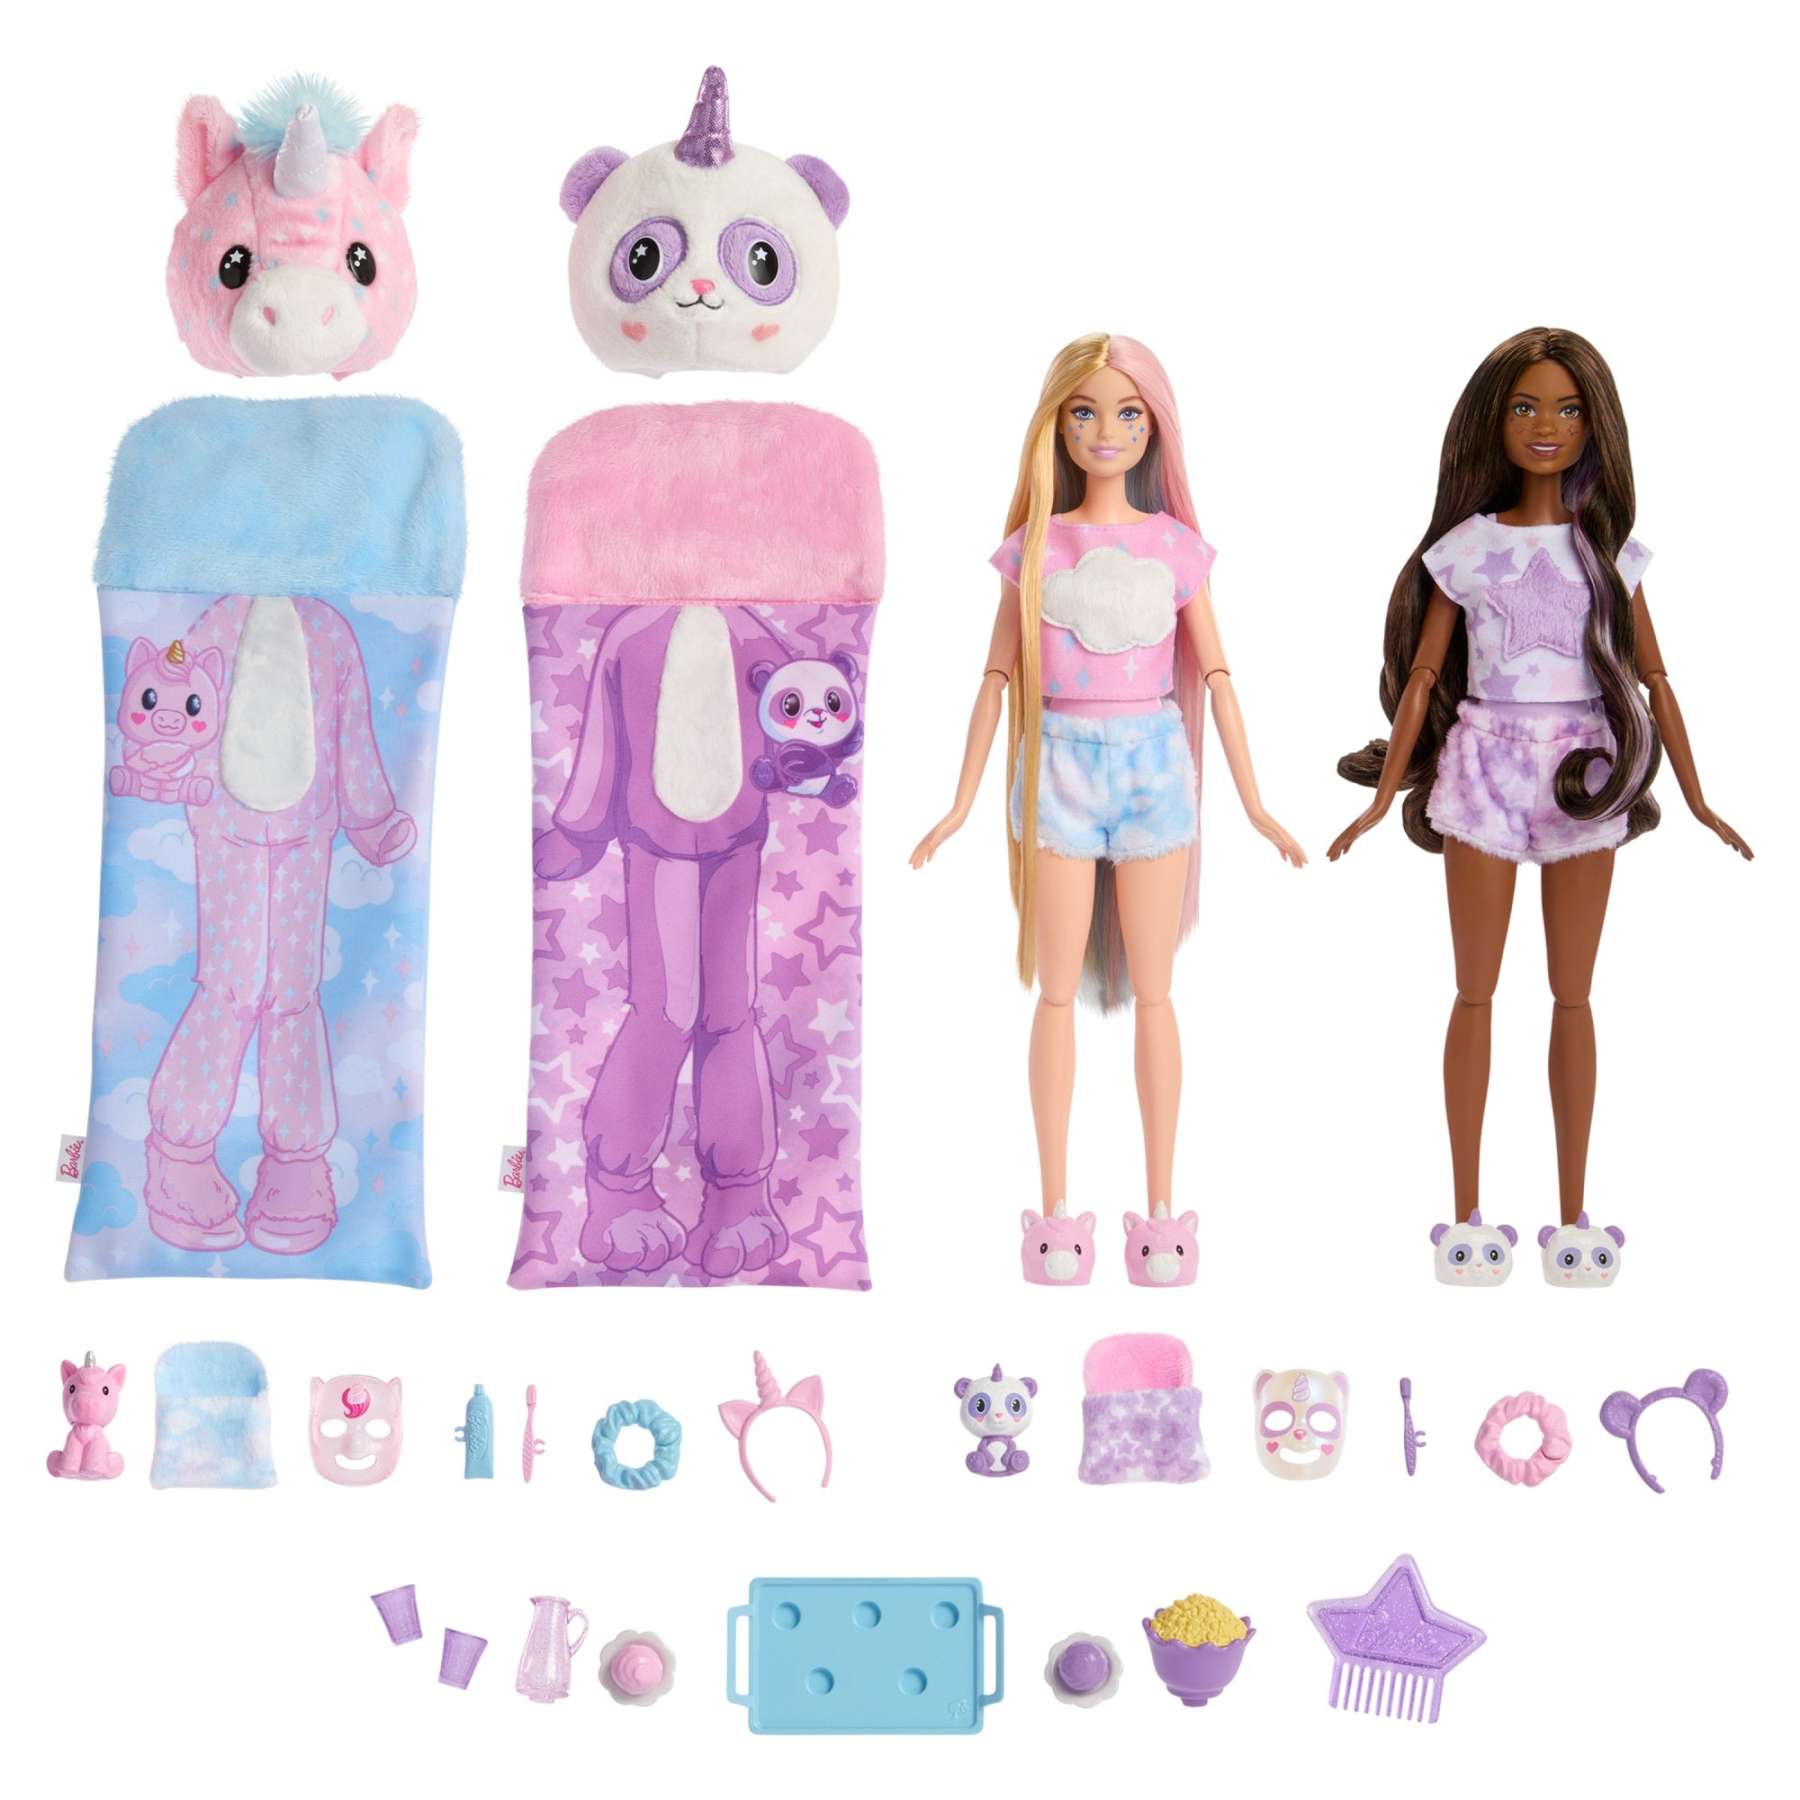 Barbie - Reveal - Cutie Reveal Cozy Sleepover Party $50 Giftset